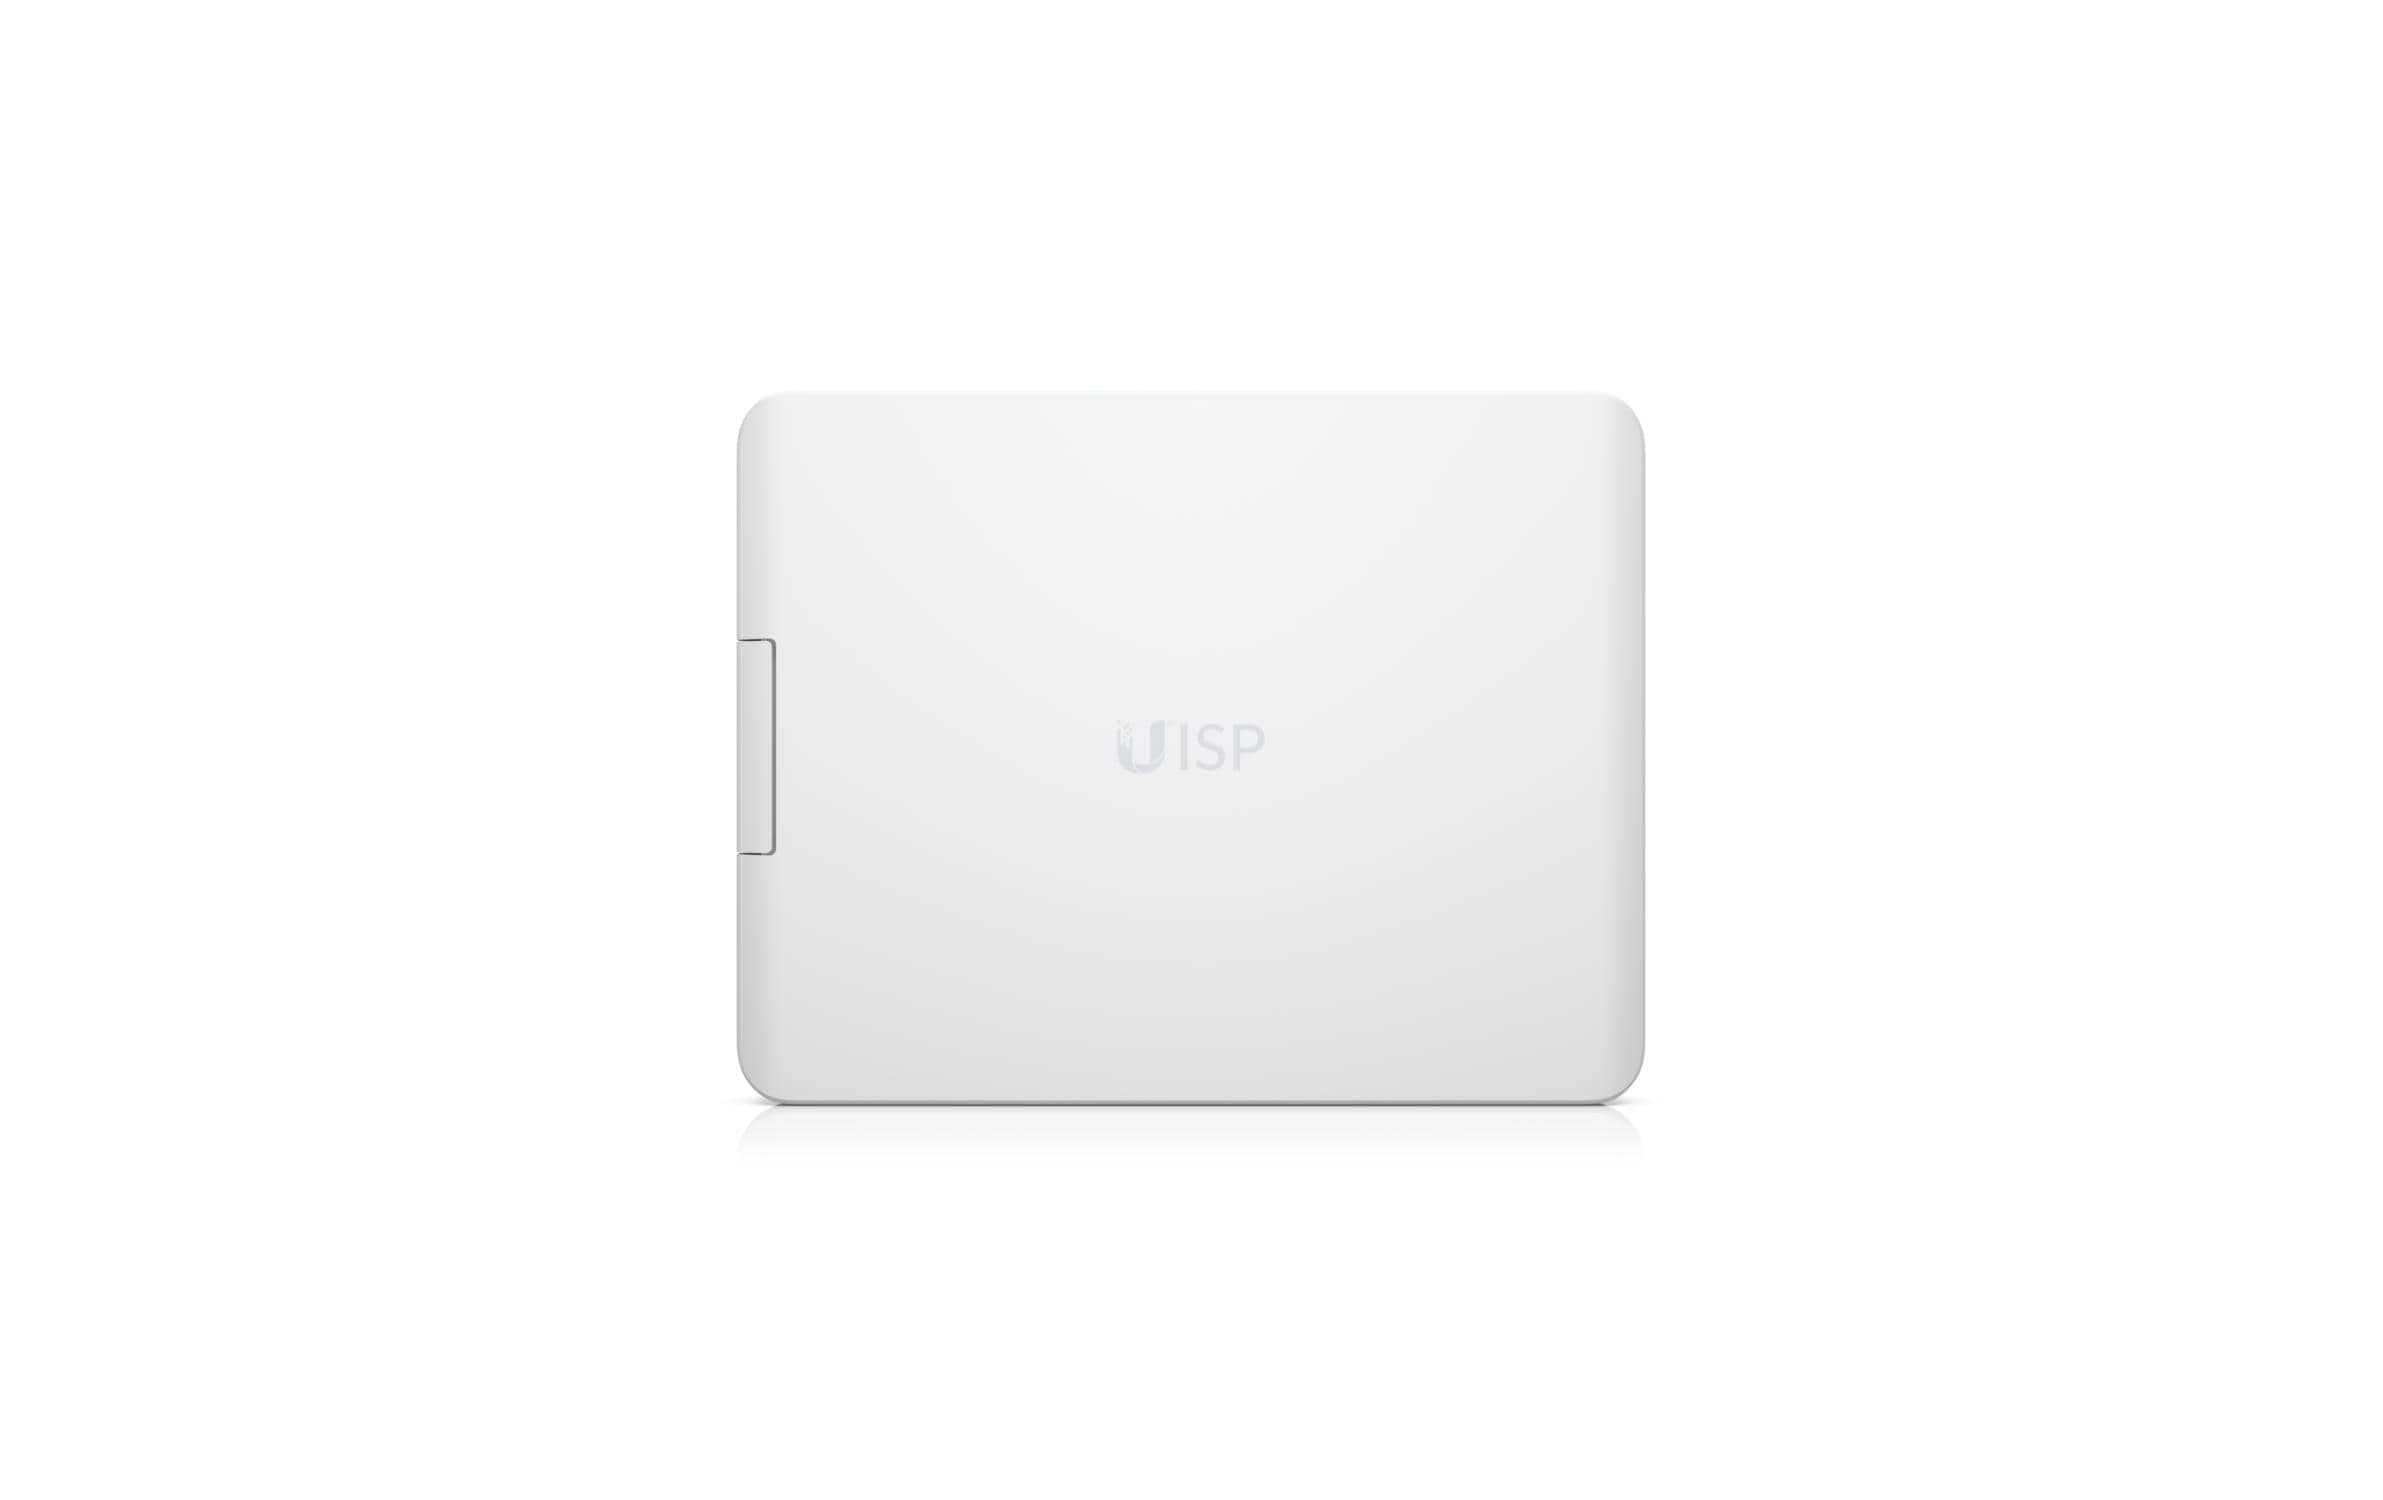 Ubiquiti Wetterfestes Aussengehäuse UISP-Box